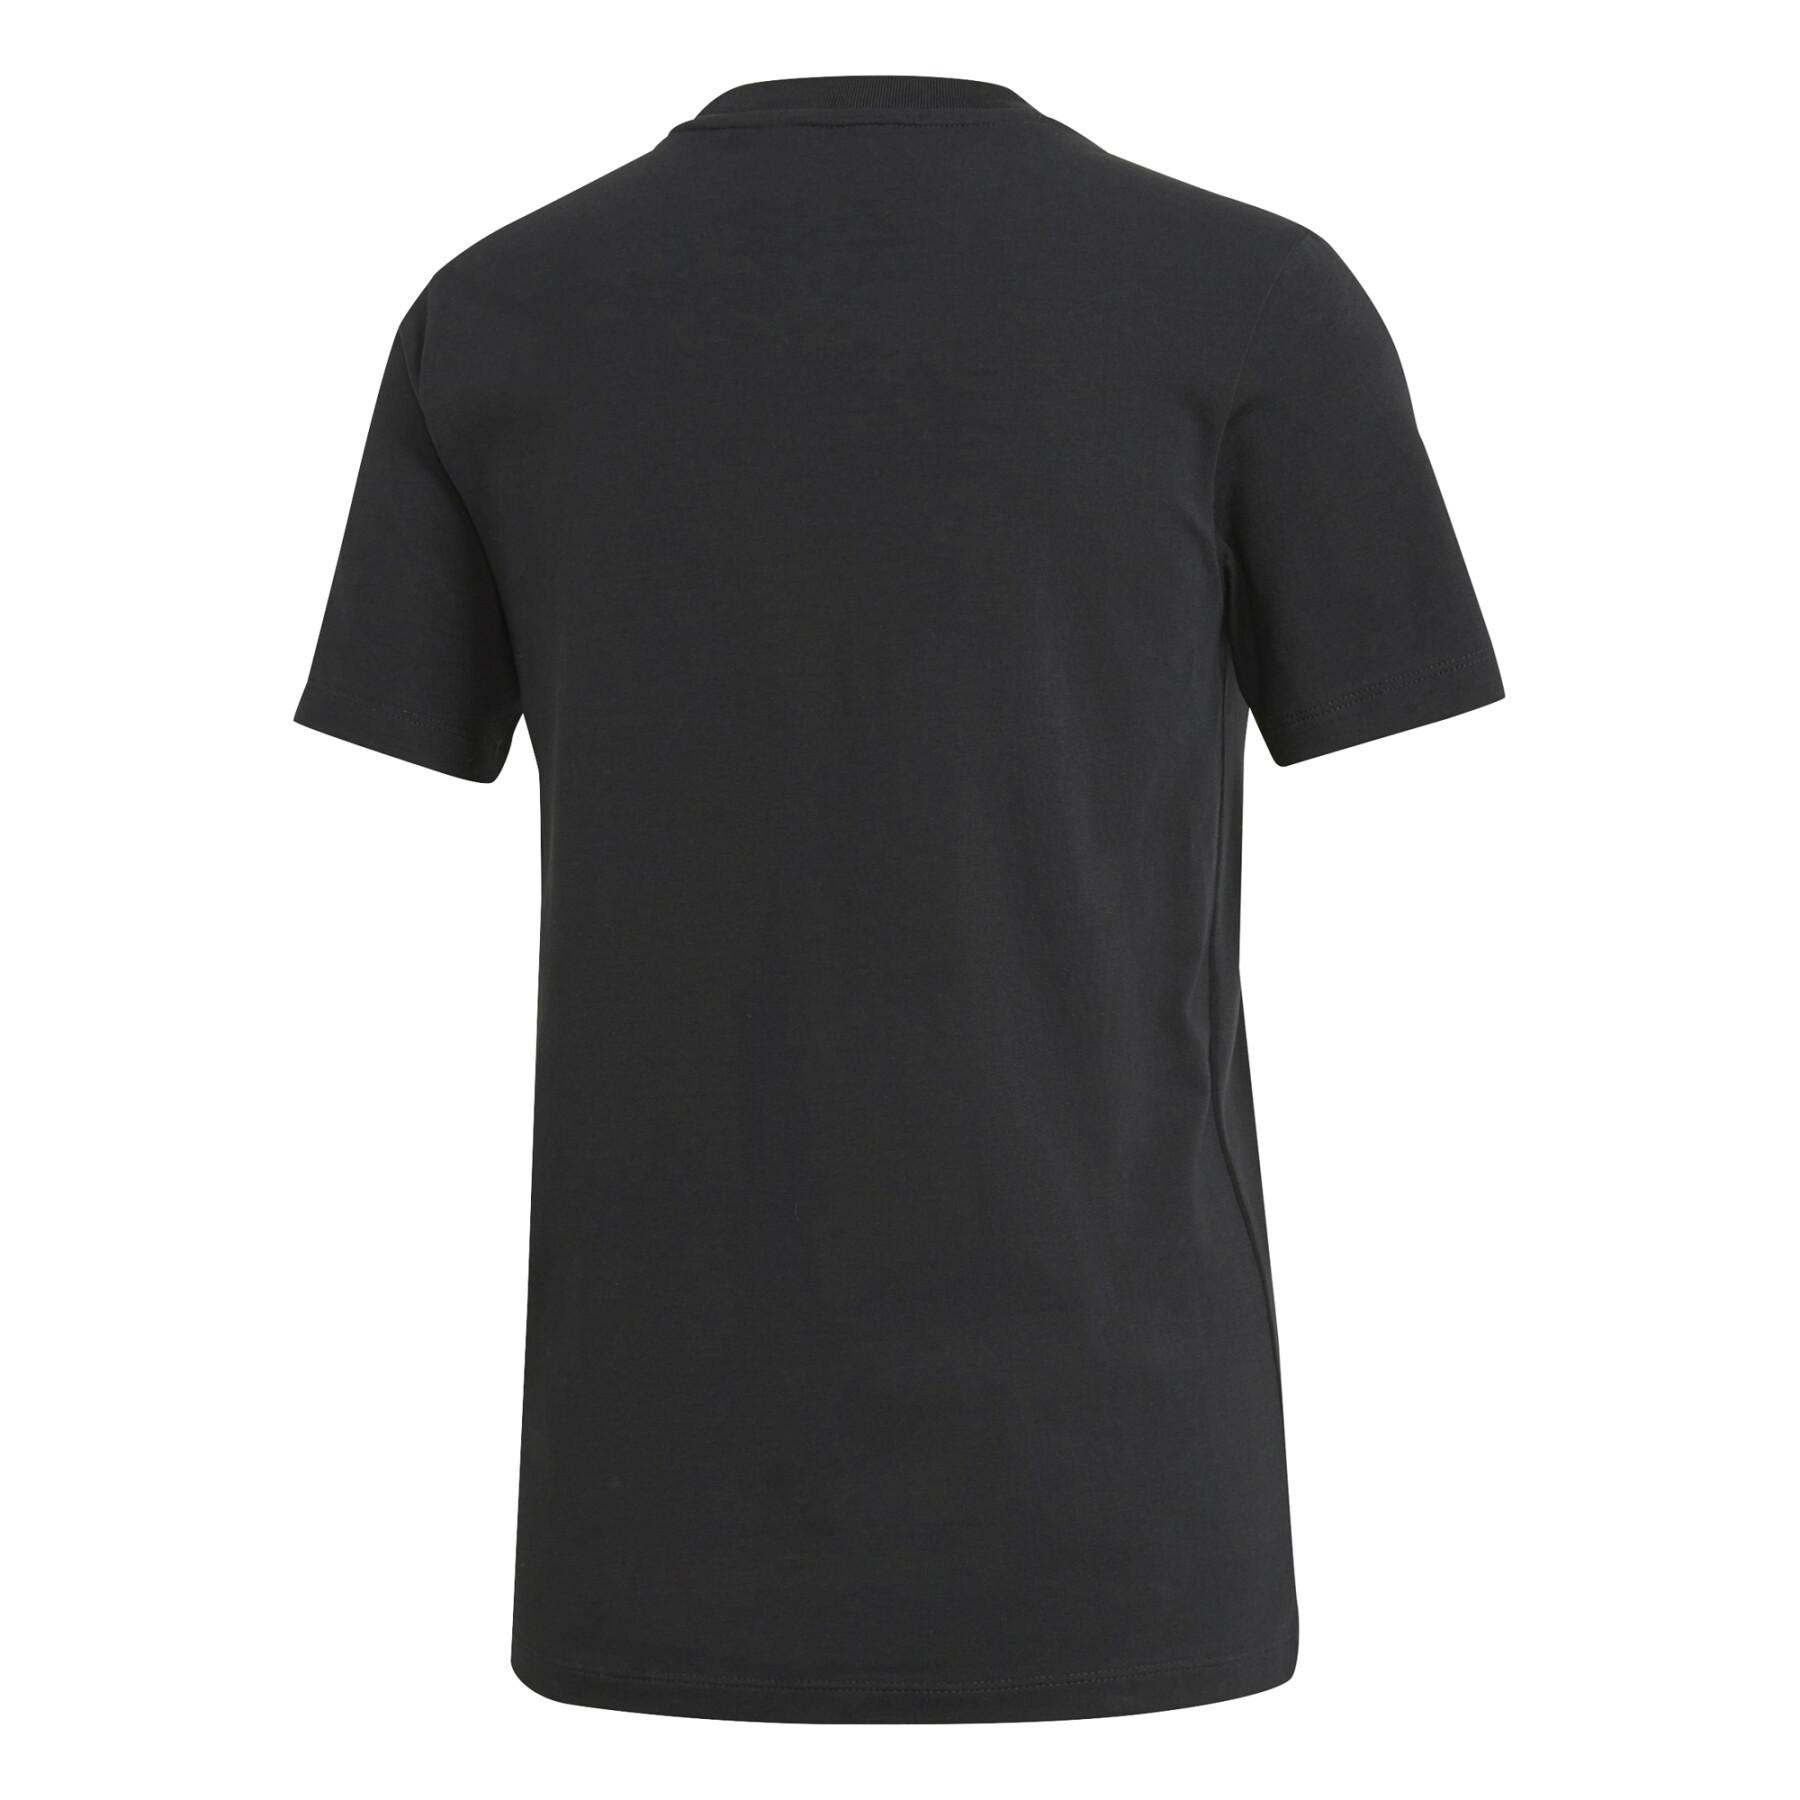 T-shirt femme adidas Trefoil maille jersey